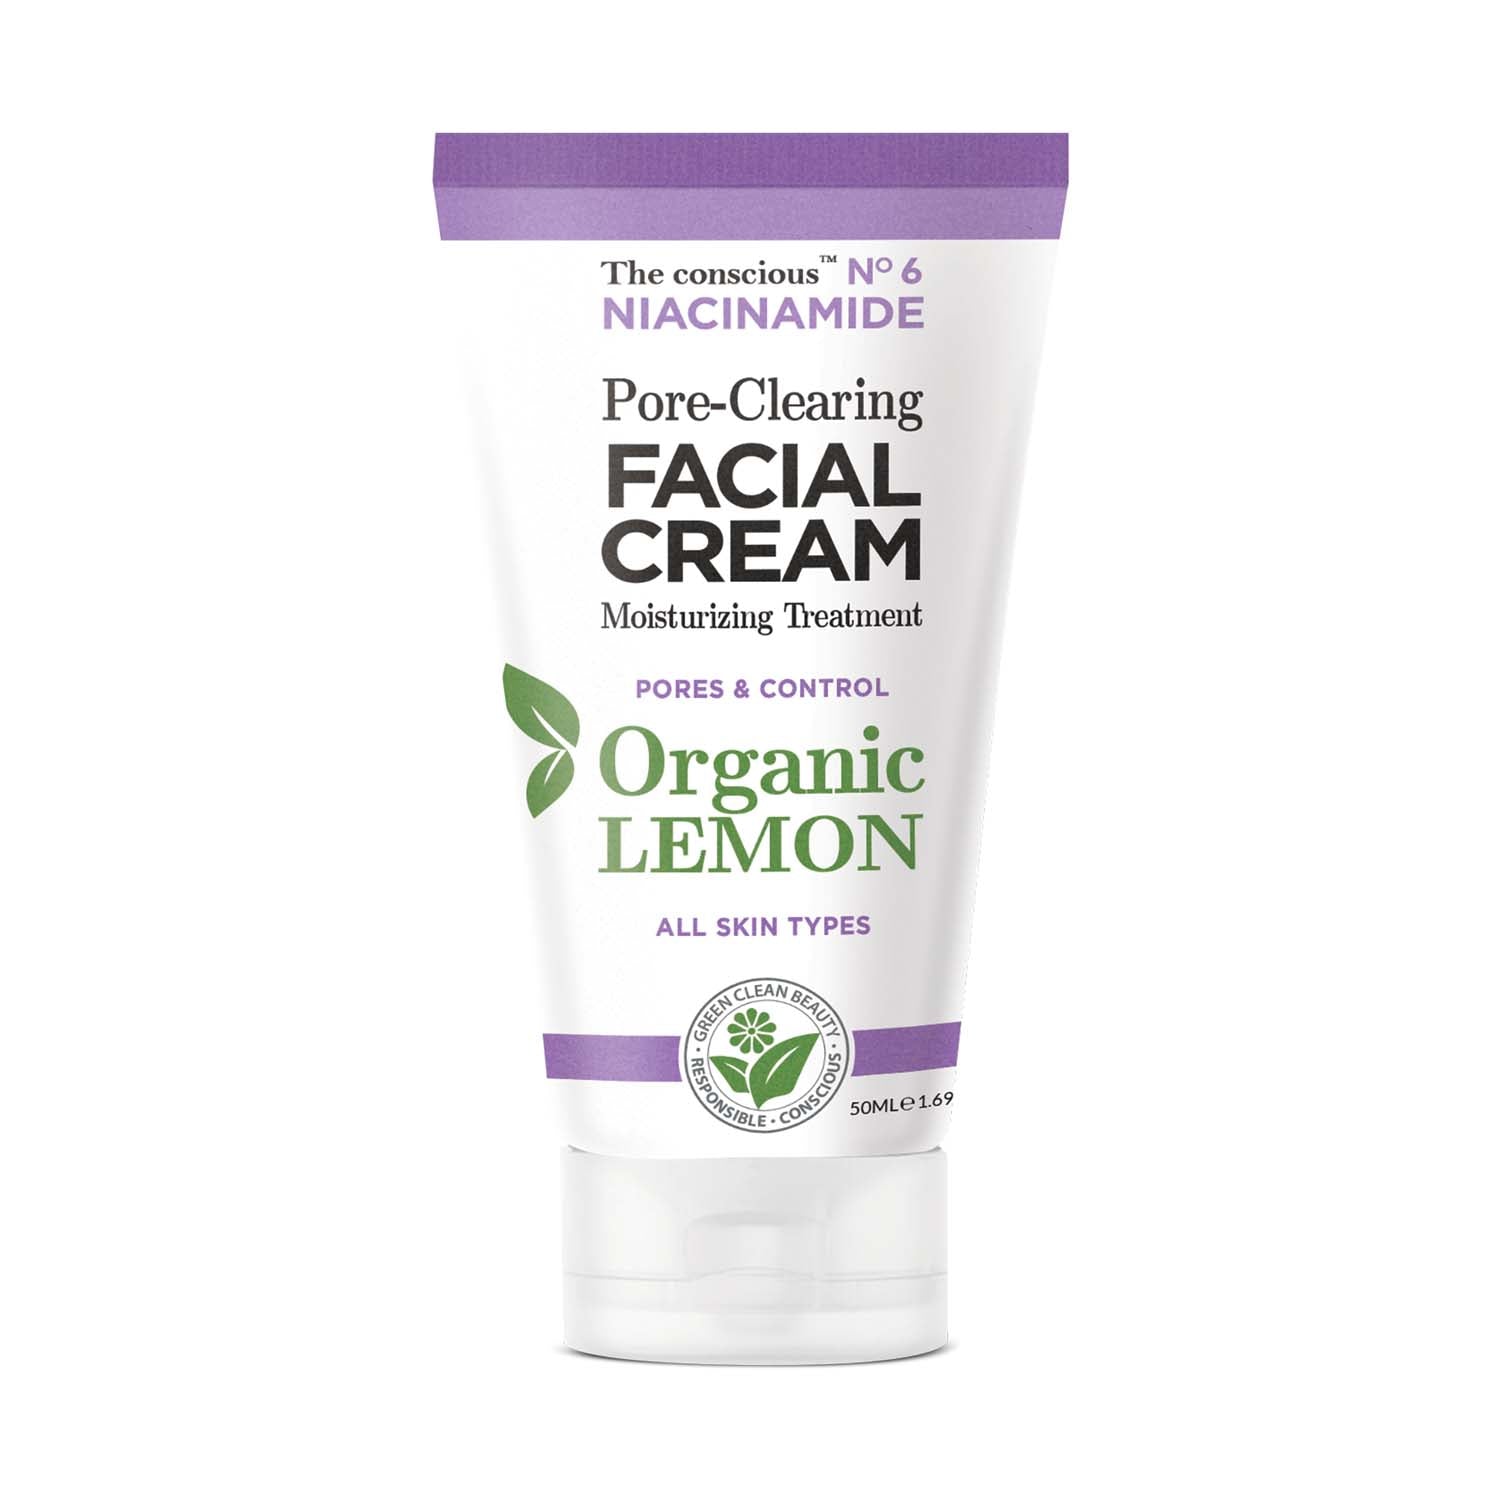 The conscious™ Niacinamide Pore-Clearing Facial Cream Organic Lemon